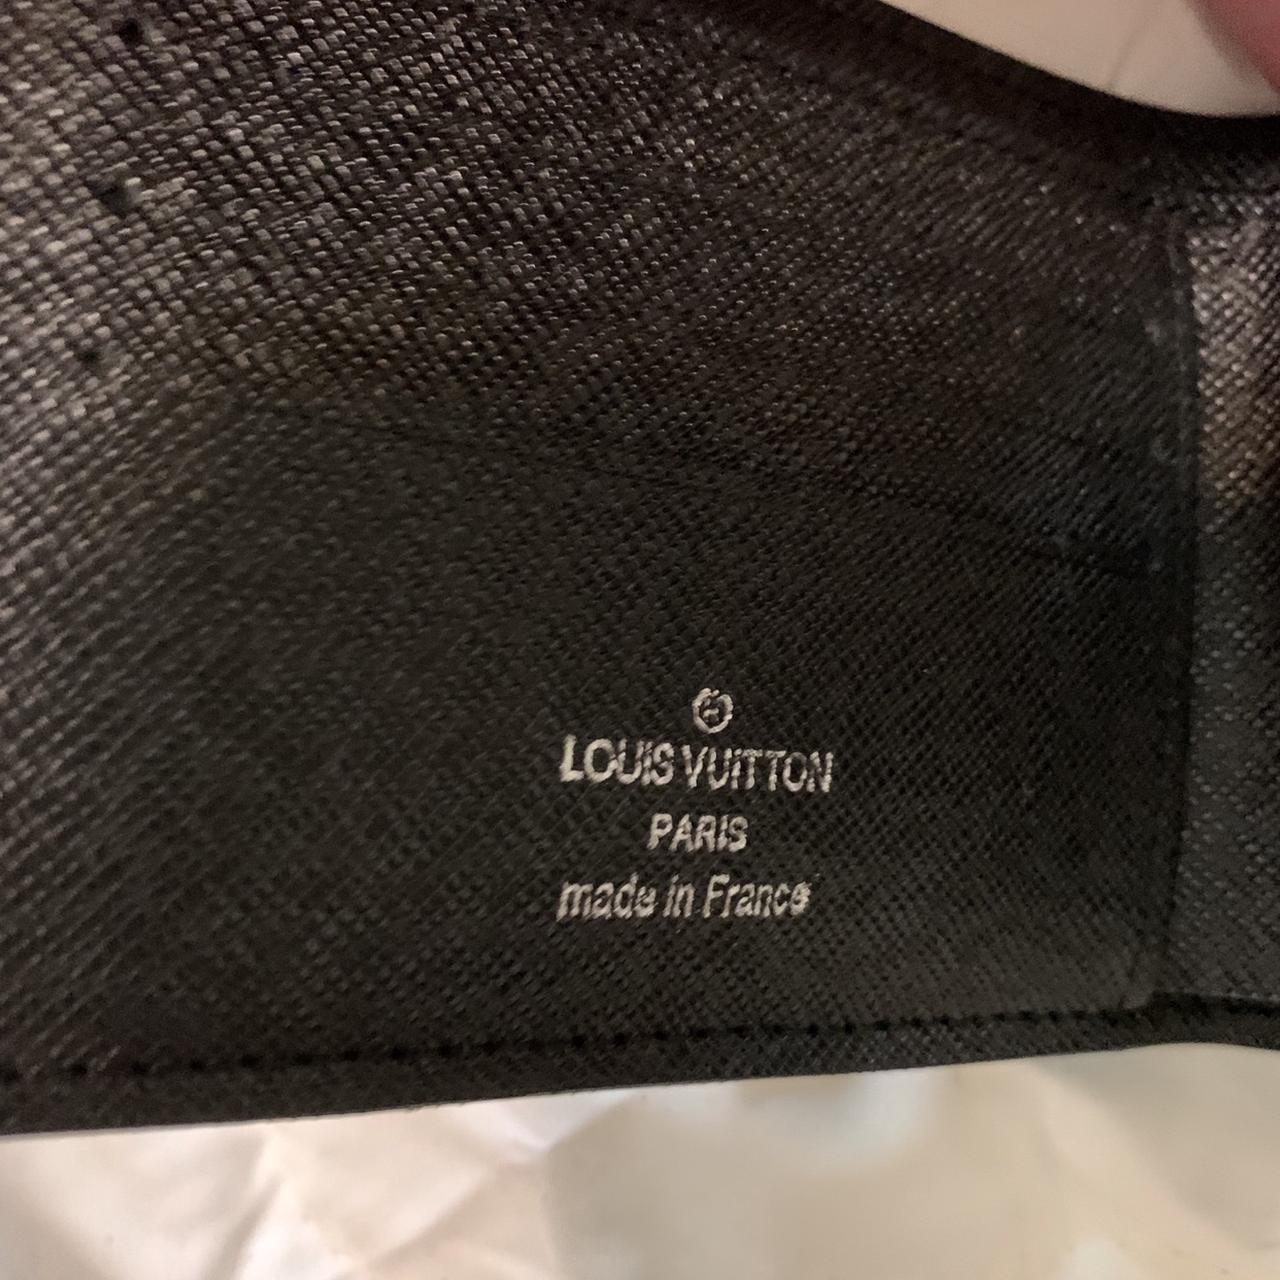 Louis Vuitton Supreme Wallet Black